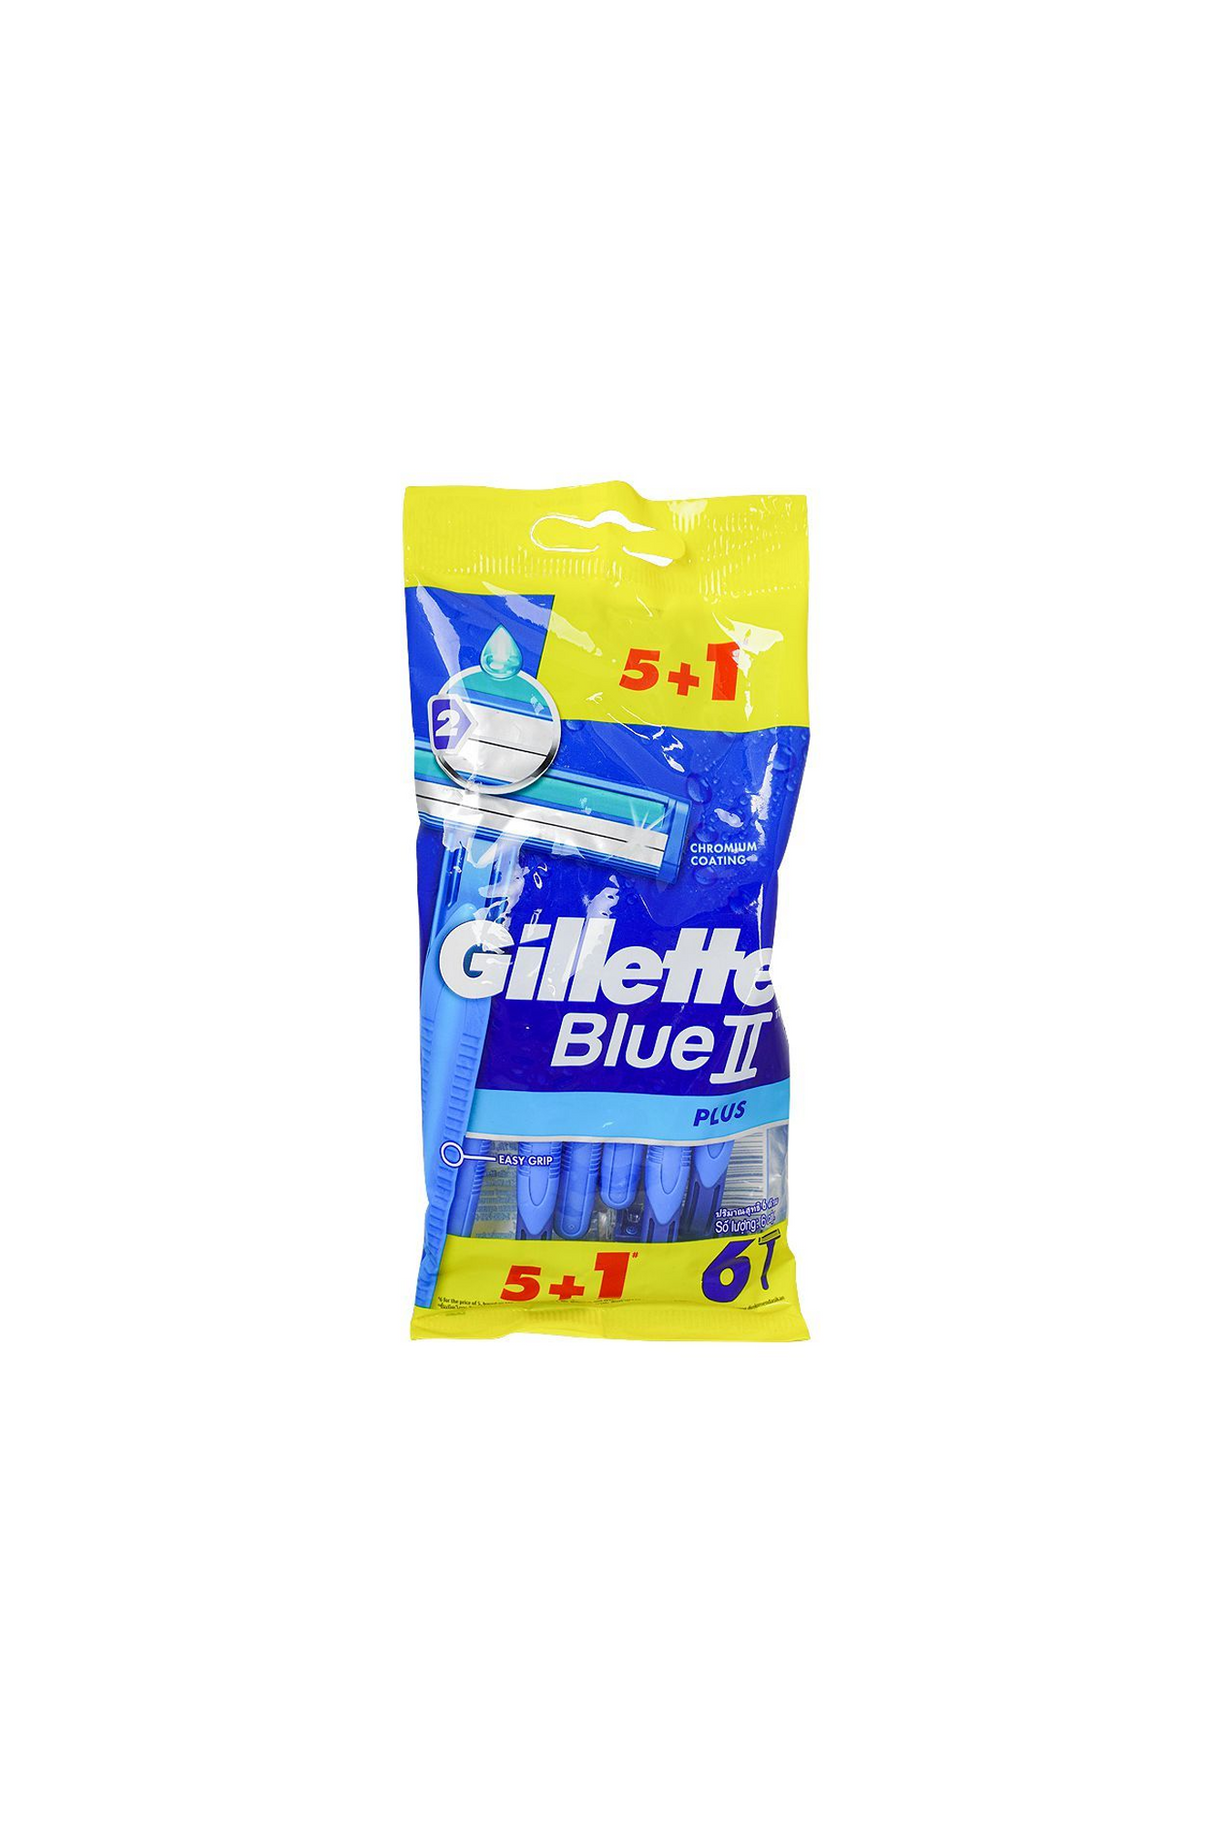 gillette blue 2 plus razor 6p